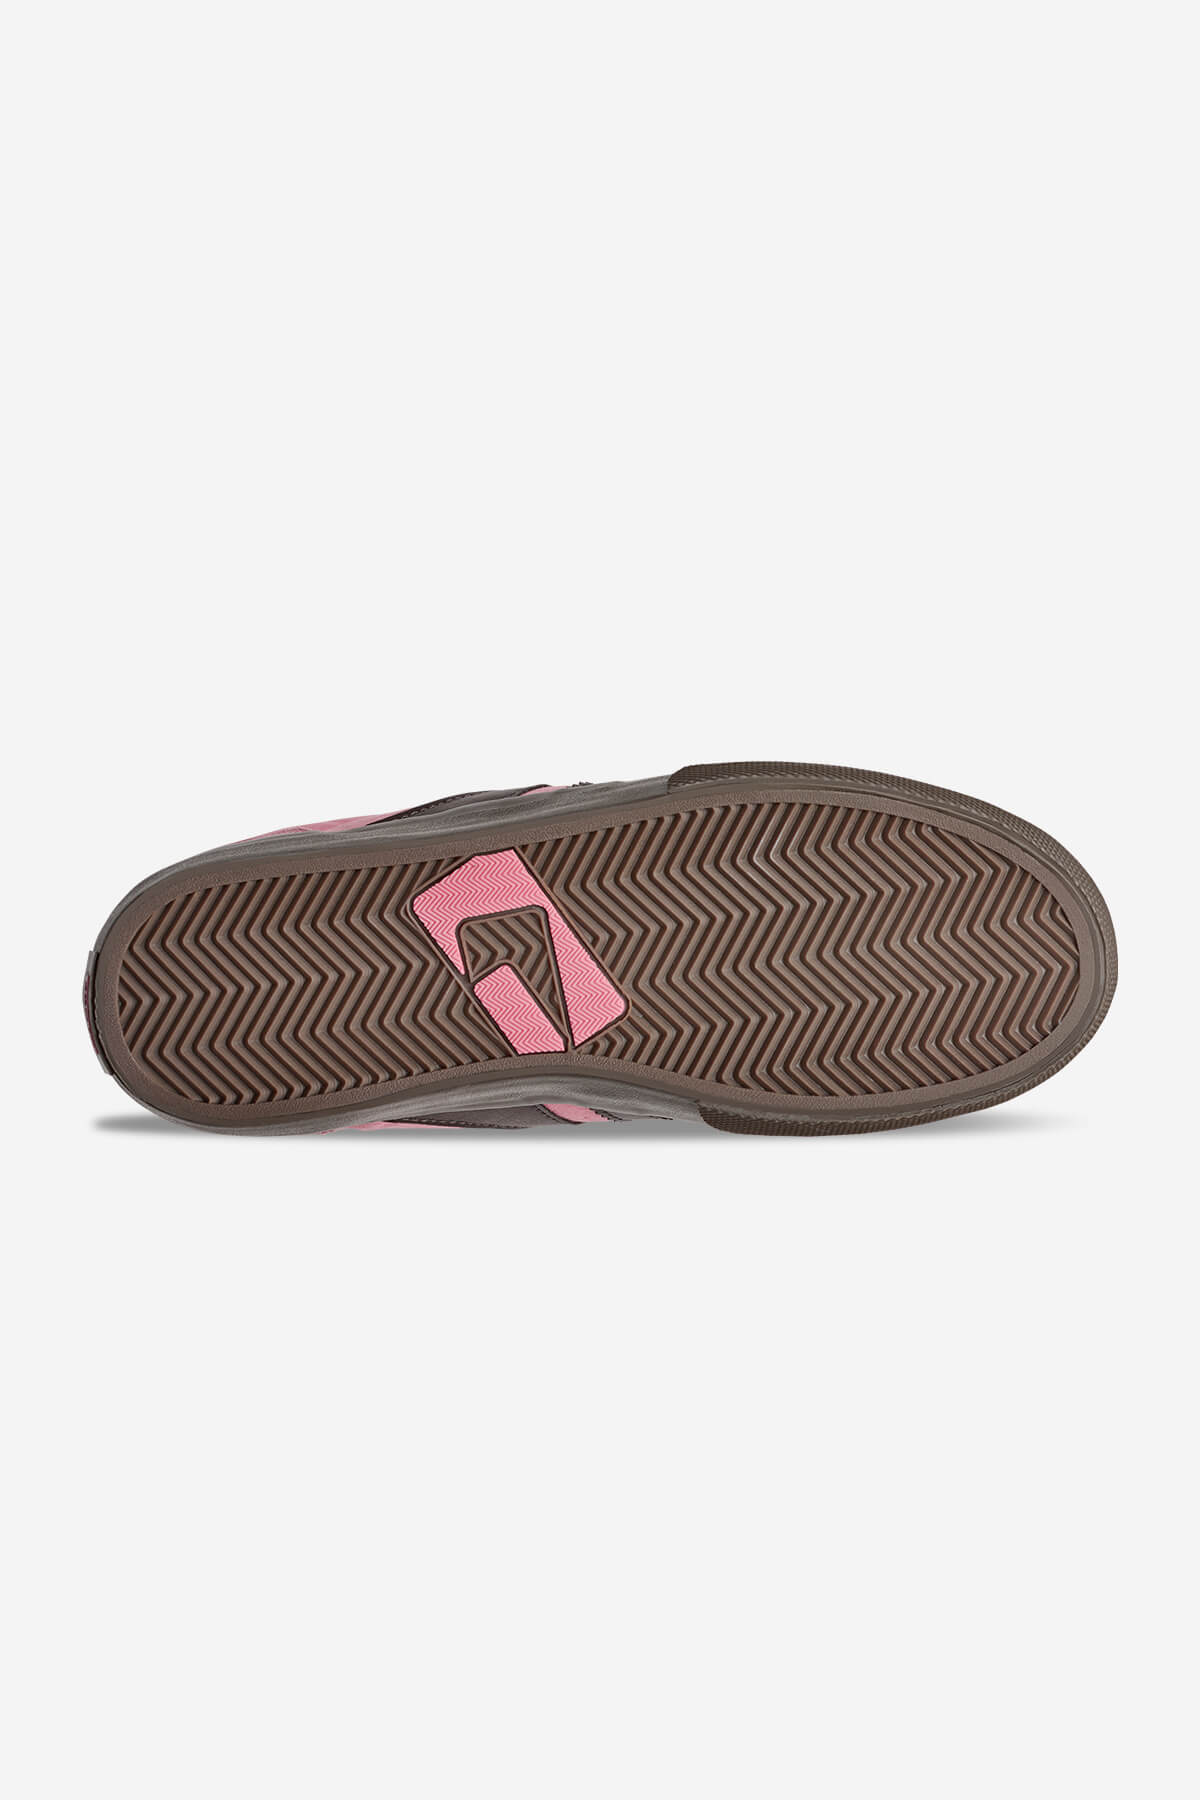 Globe Low shoes Encore-2 - Pink/Dark Gum in Pink/Dark Gum